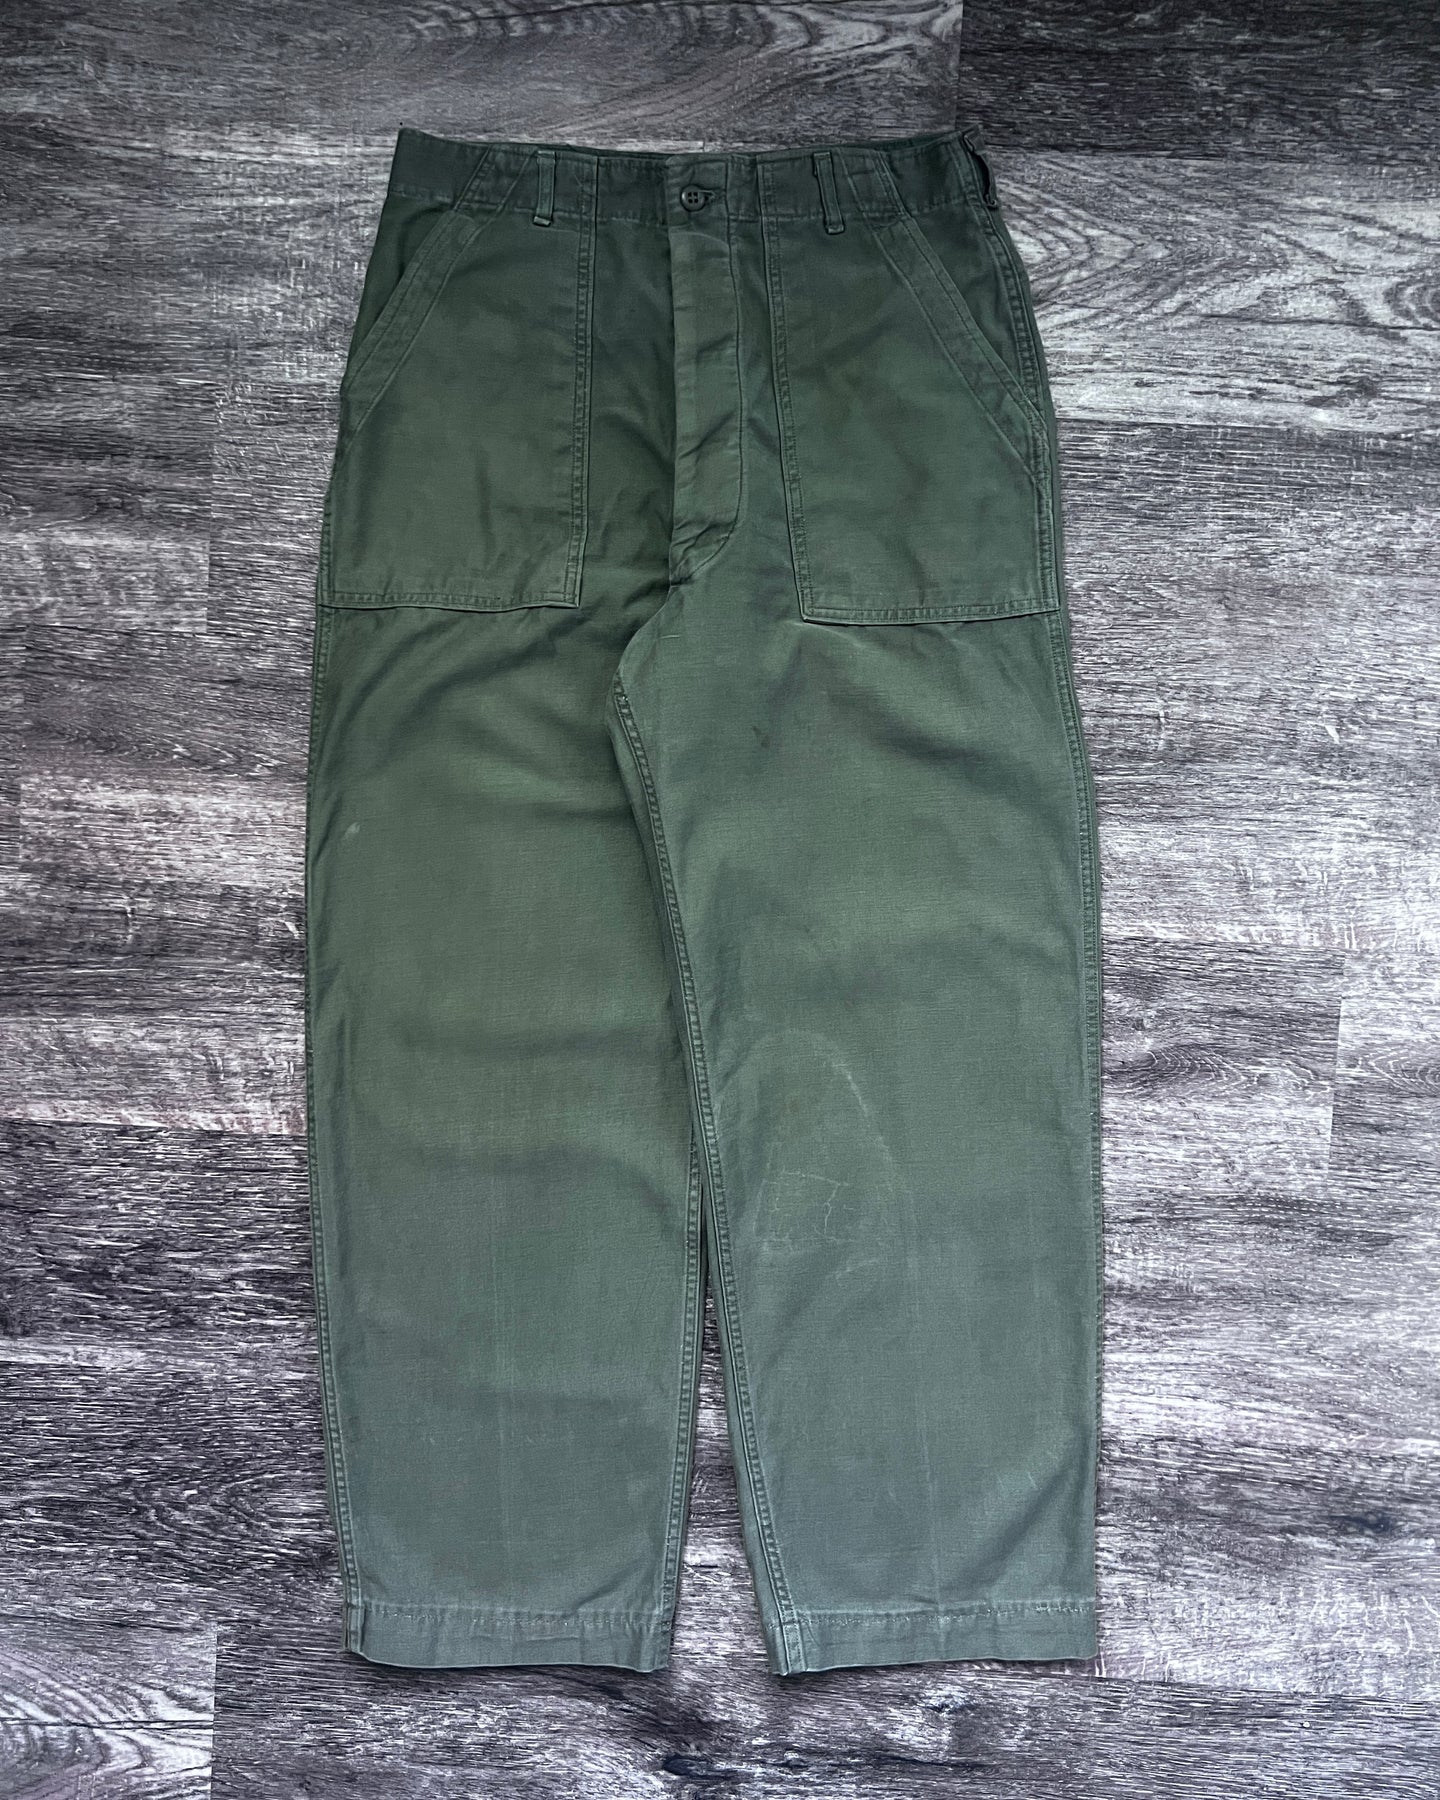 1970s OG-107 Fatigue Pants - Size 32 x 30